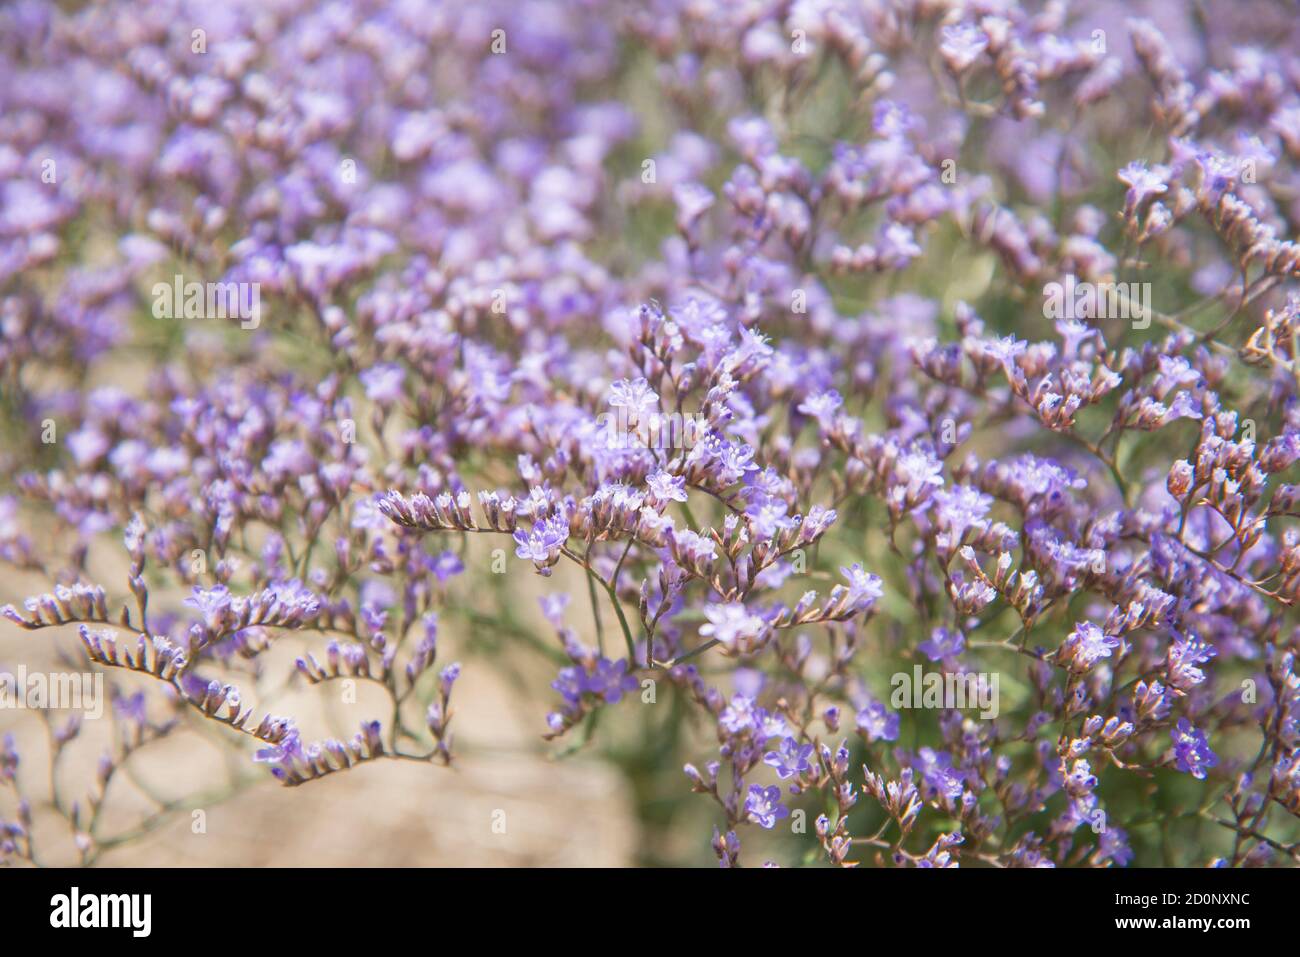 Kermek broadleaf/Limonium platyphyllum flowers background Stock Photo